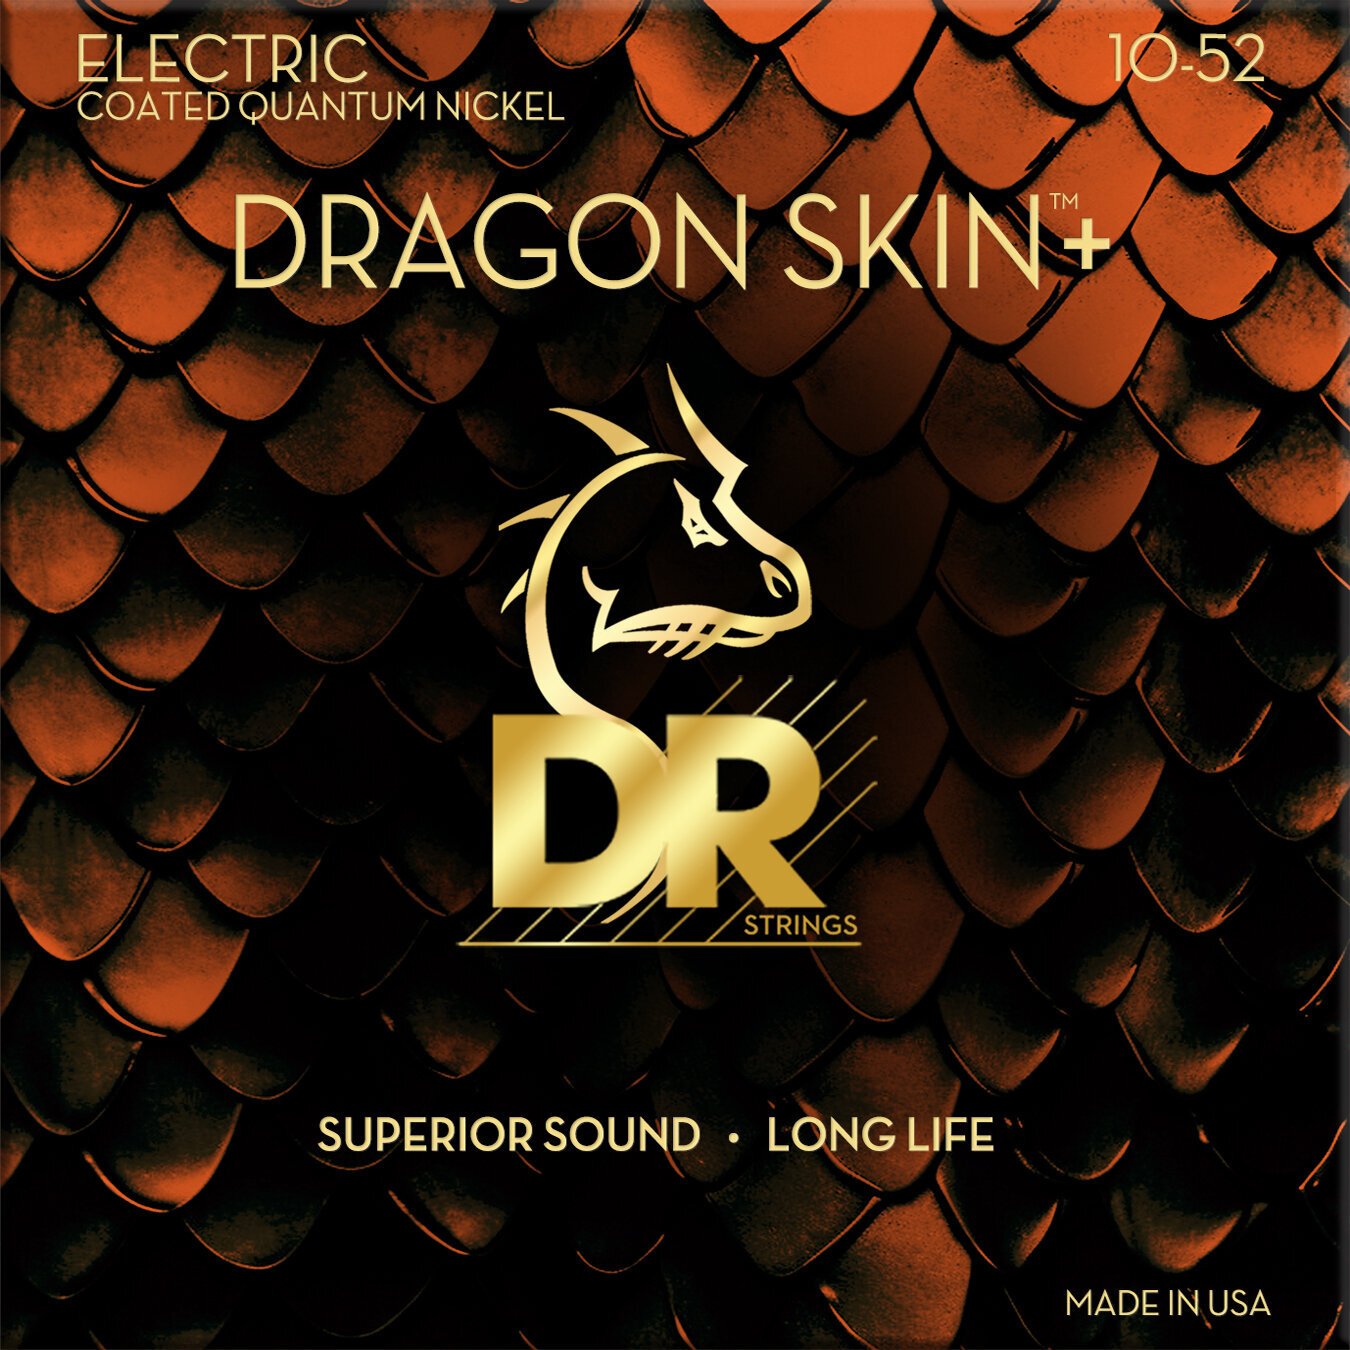 E-gitarrsträngar DR Strings Dragon Skin+ Coated Medium to Heavy 10-52